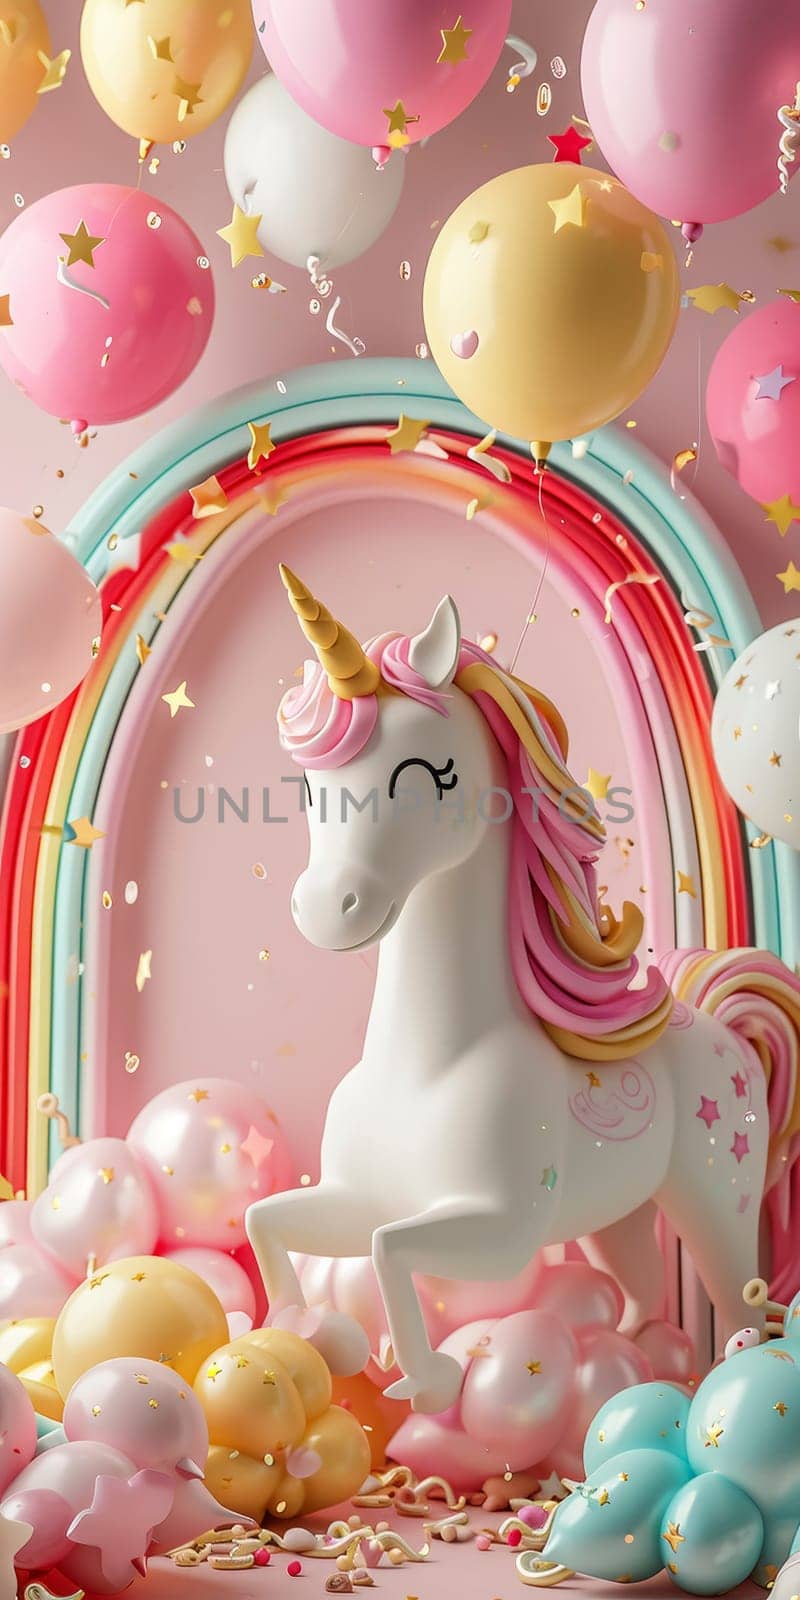 Unicorn figurine with birthday cake and balloons by andreyz